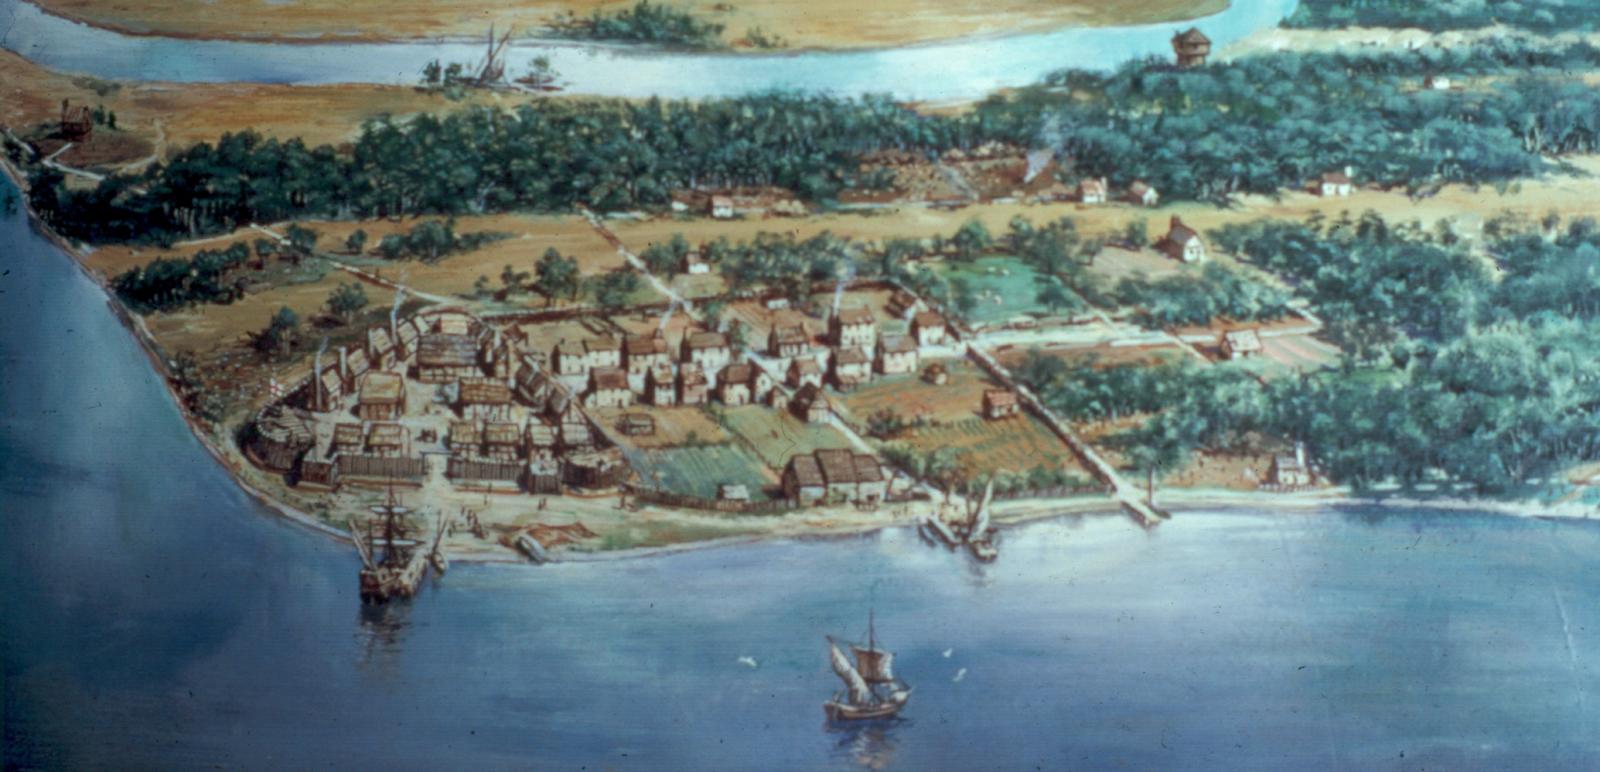 Colonial Jamestown in 1614.